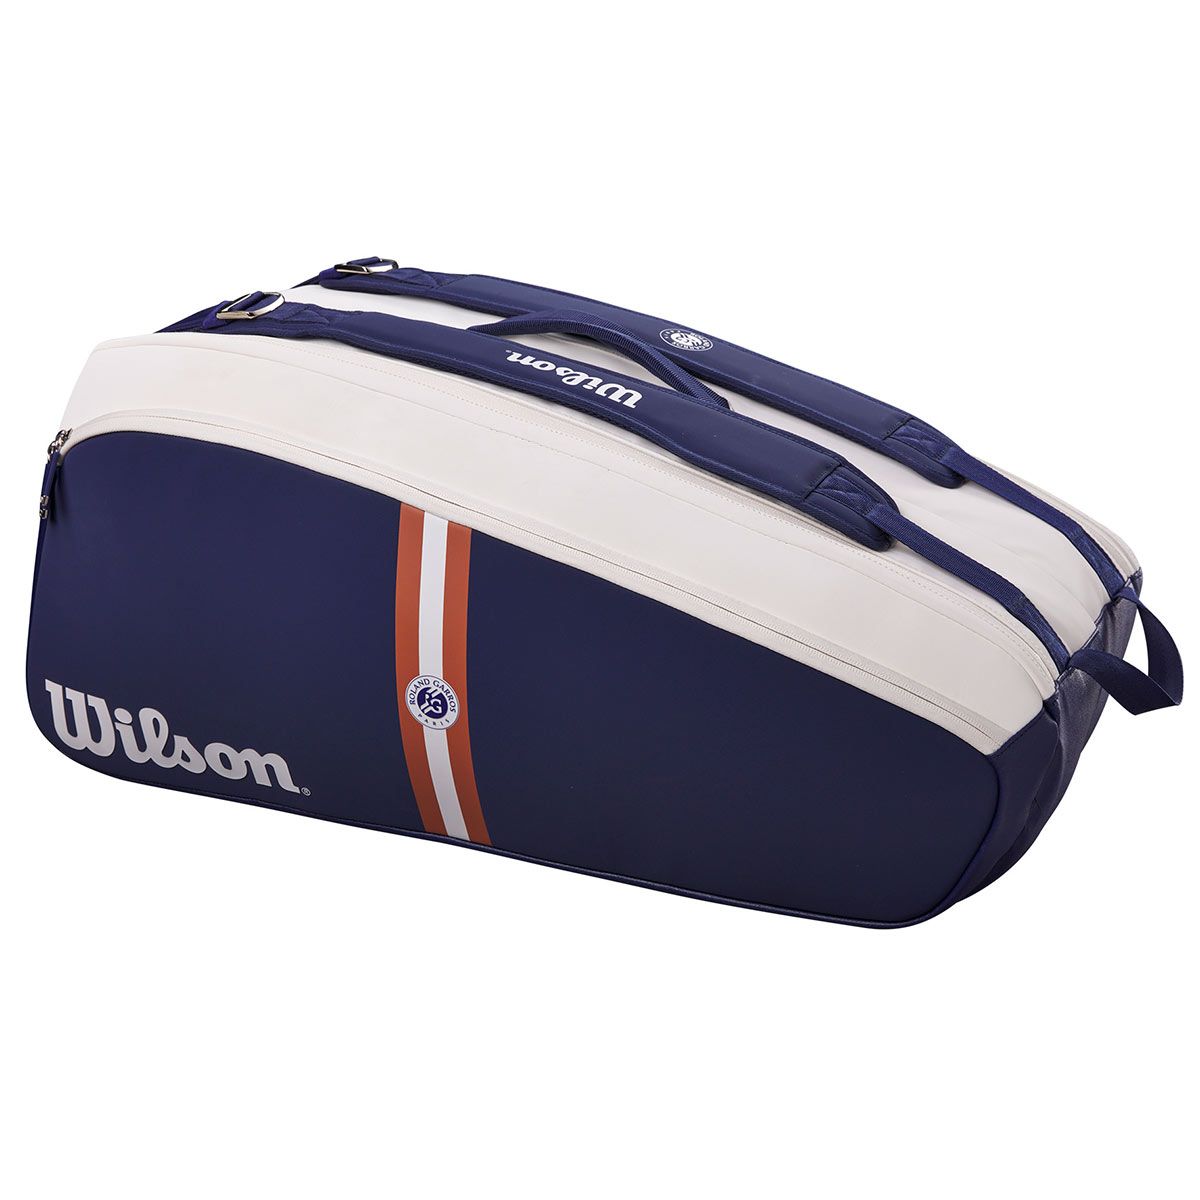 Wilson Roland Garros Super Tour 9-Pack Tennis Bag WR8026001